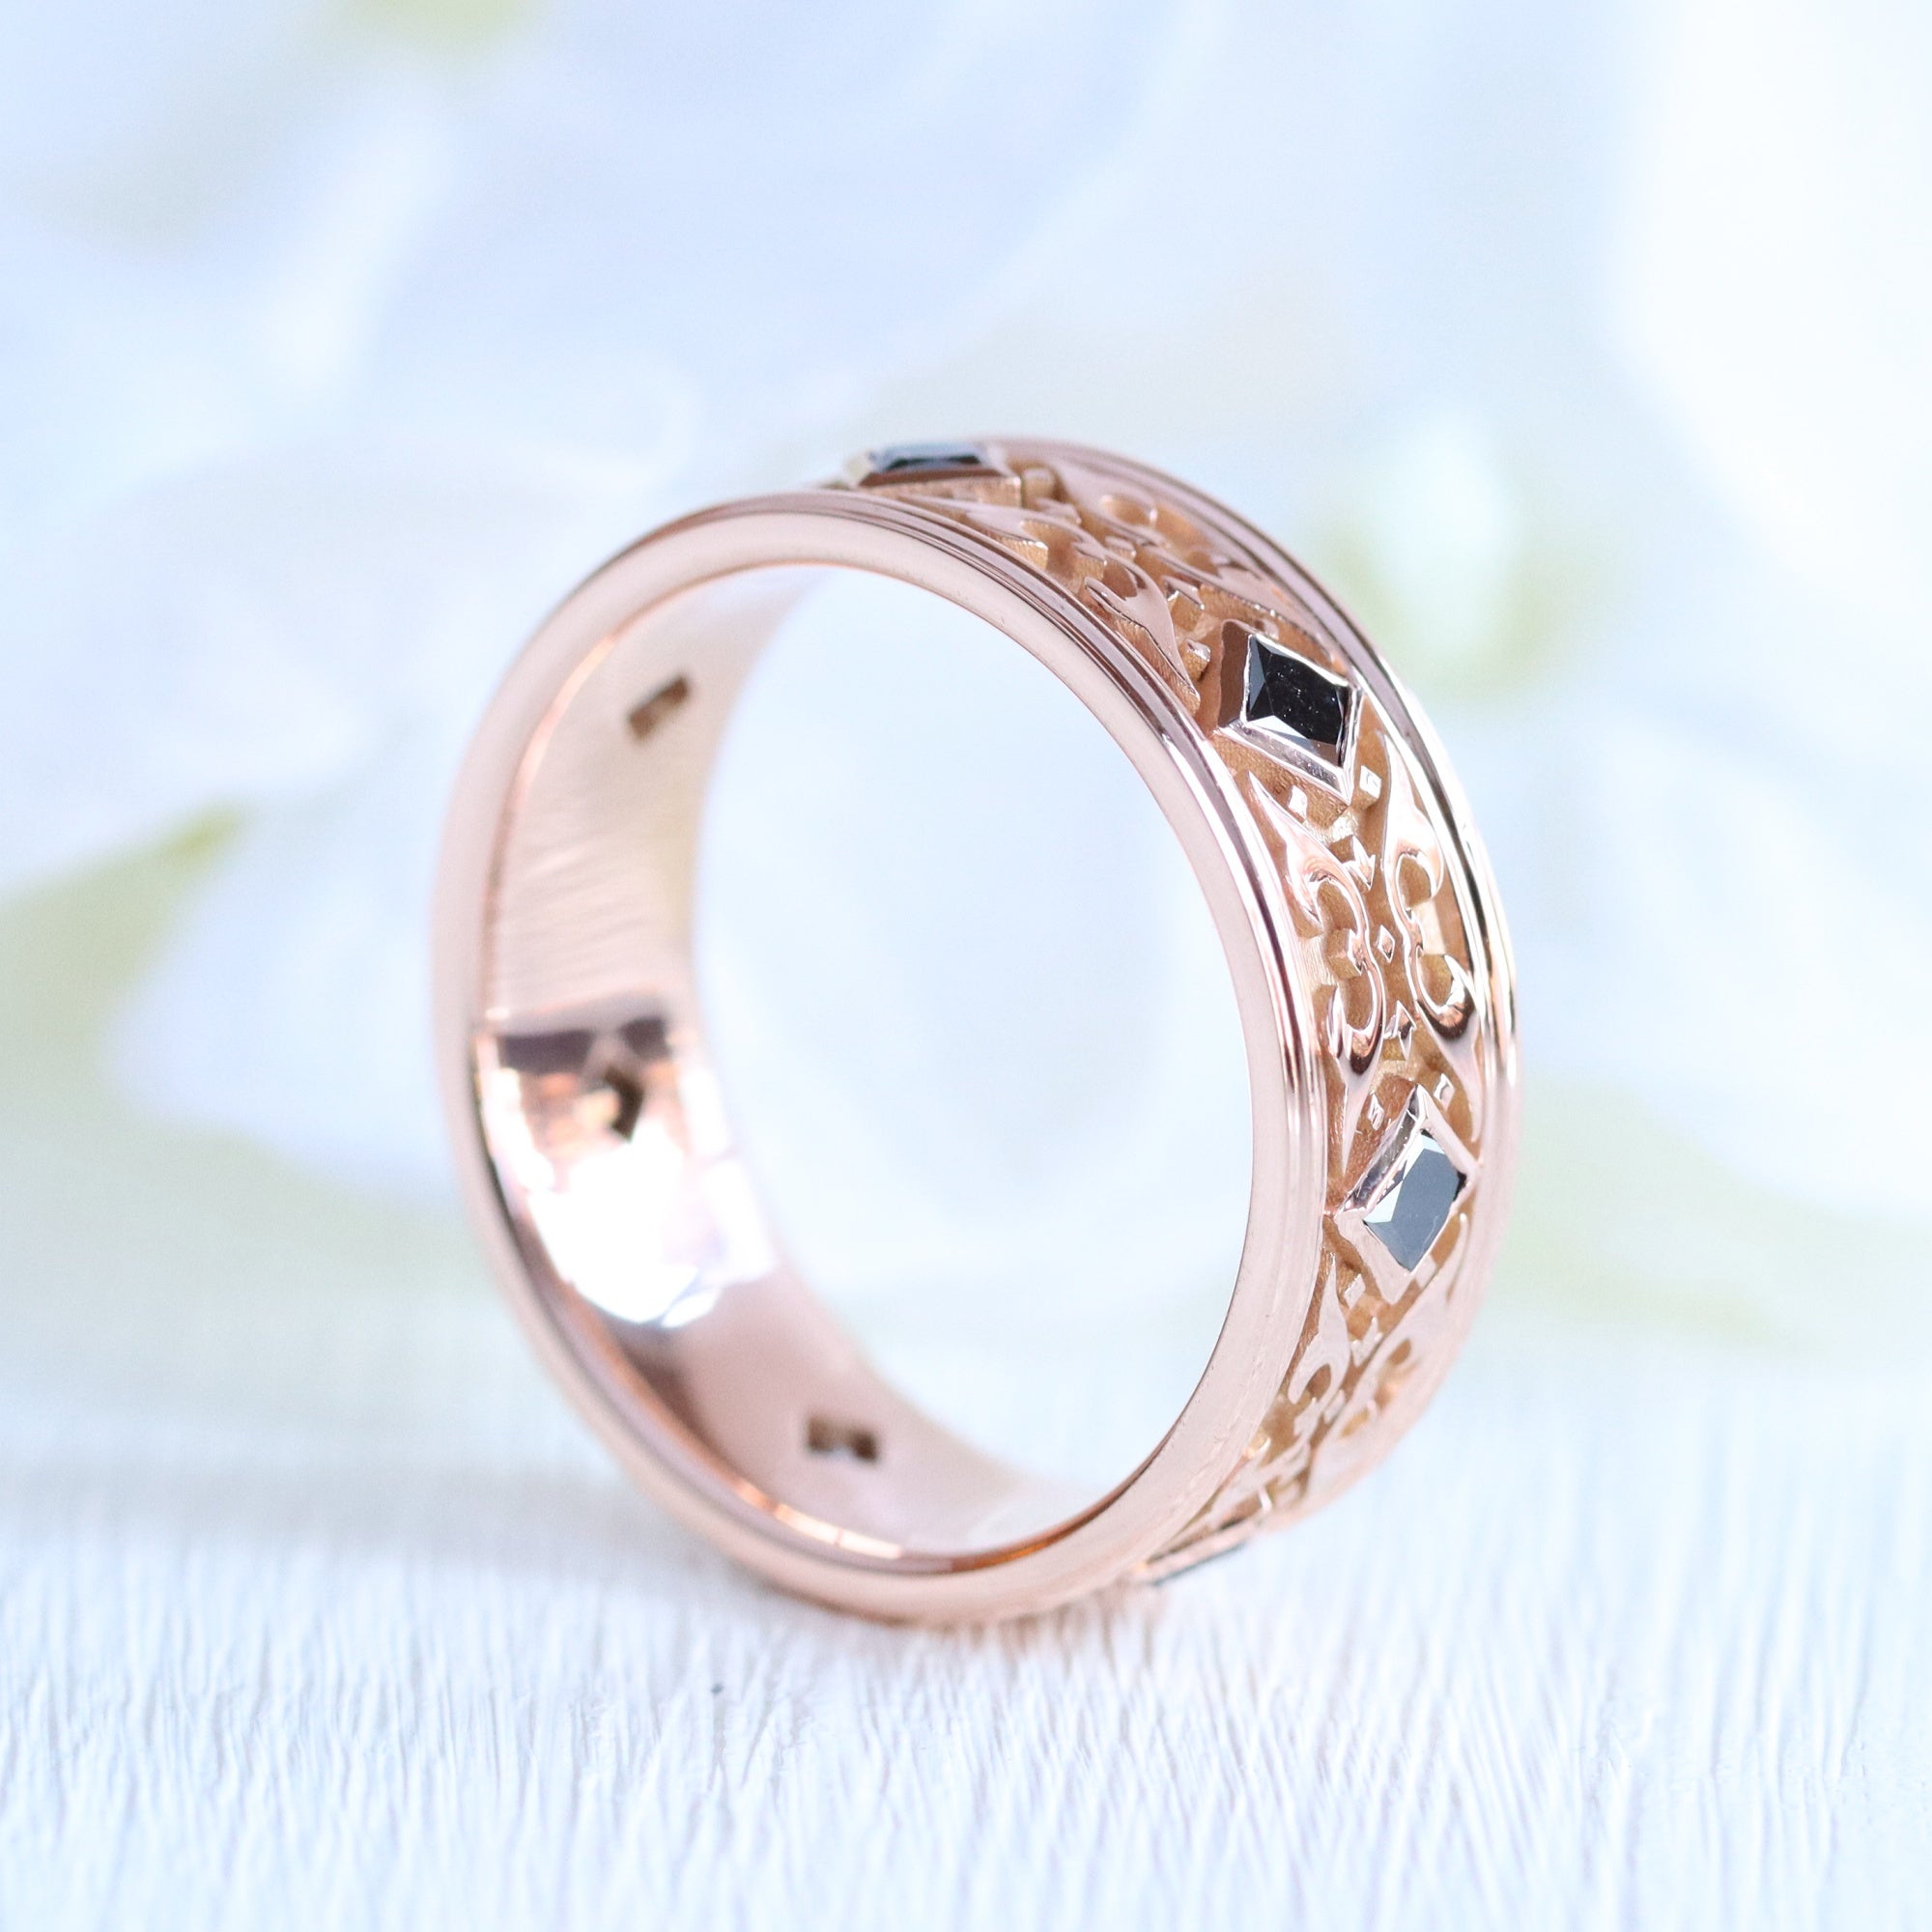 Princess cut black diamond ring rose gold Celtic knot wedding band for him la more design jewelry